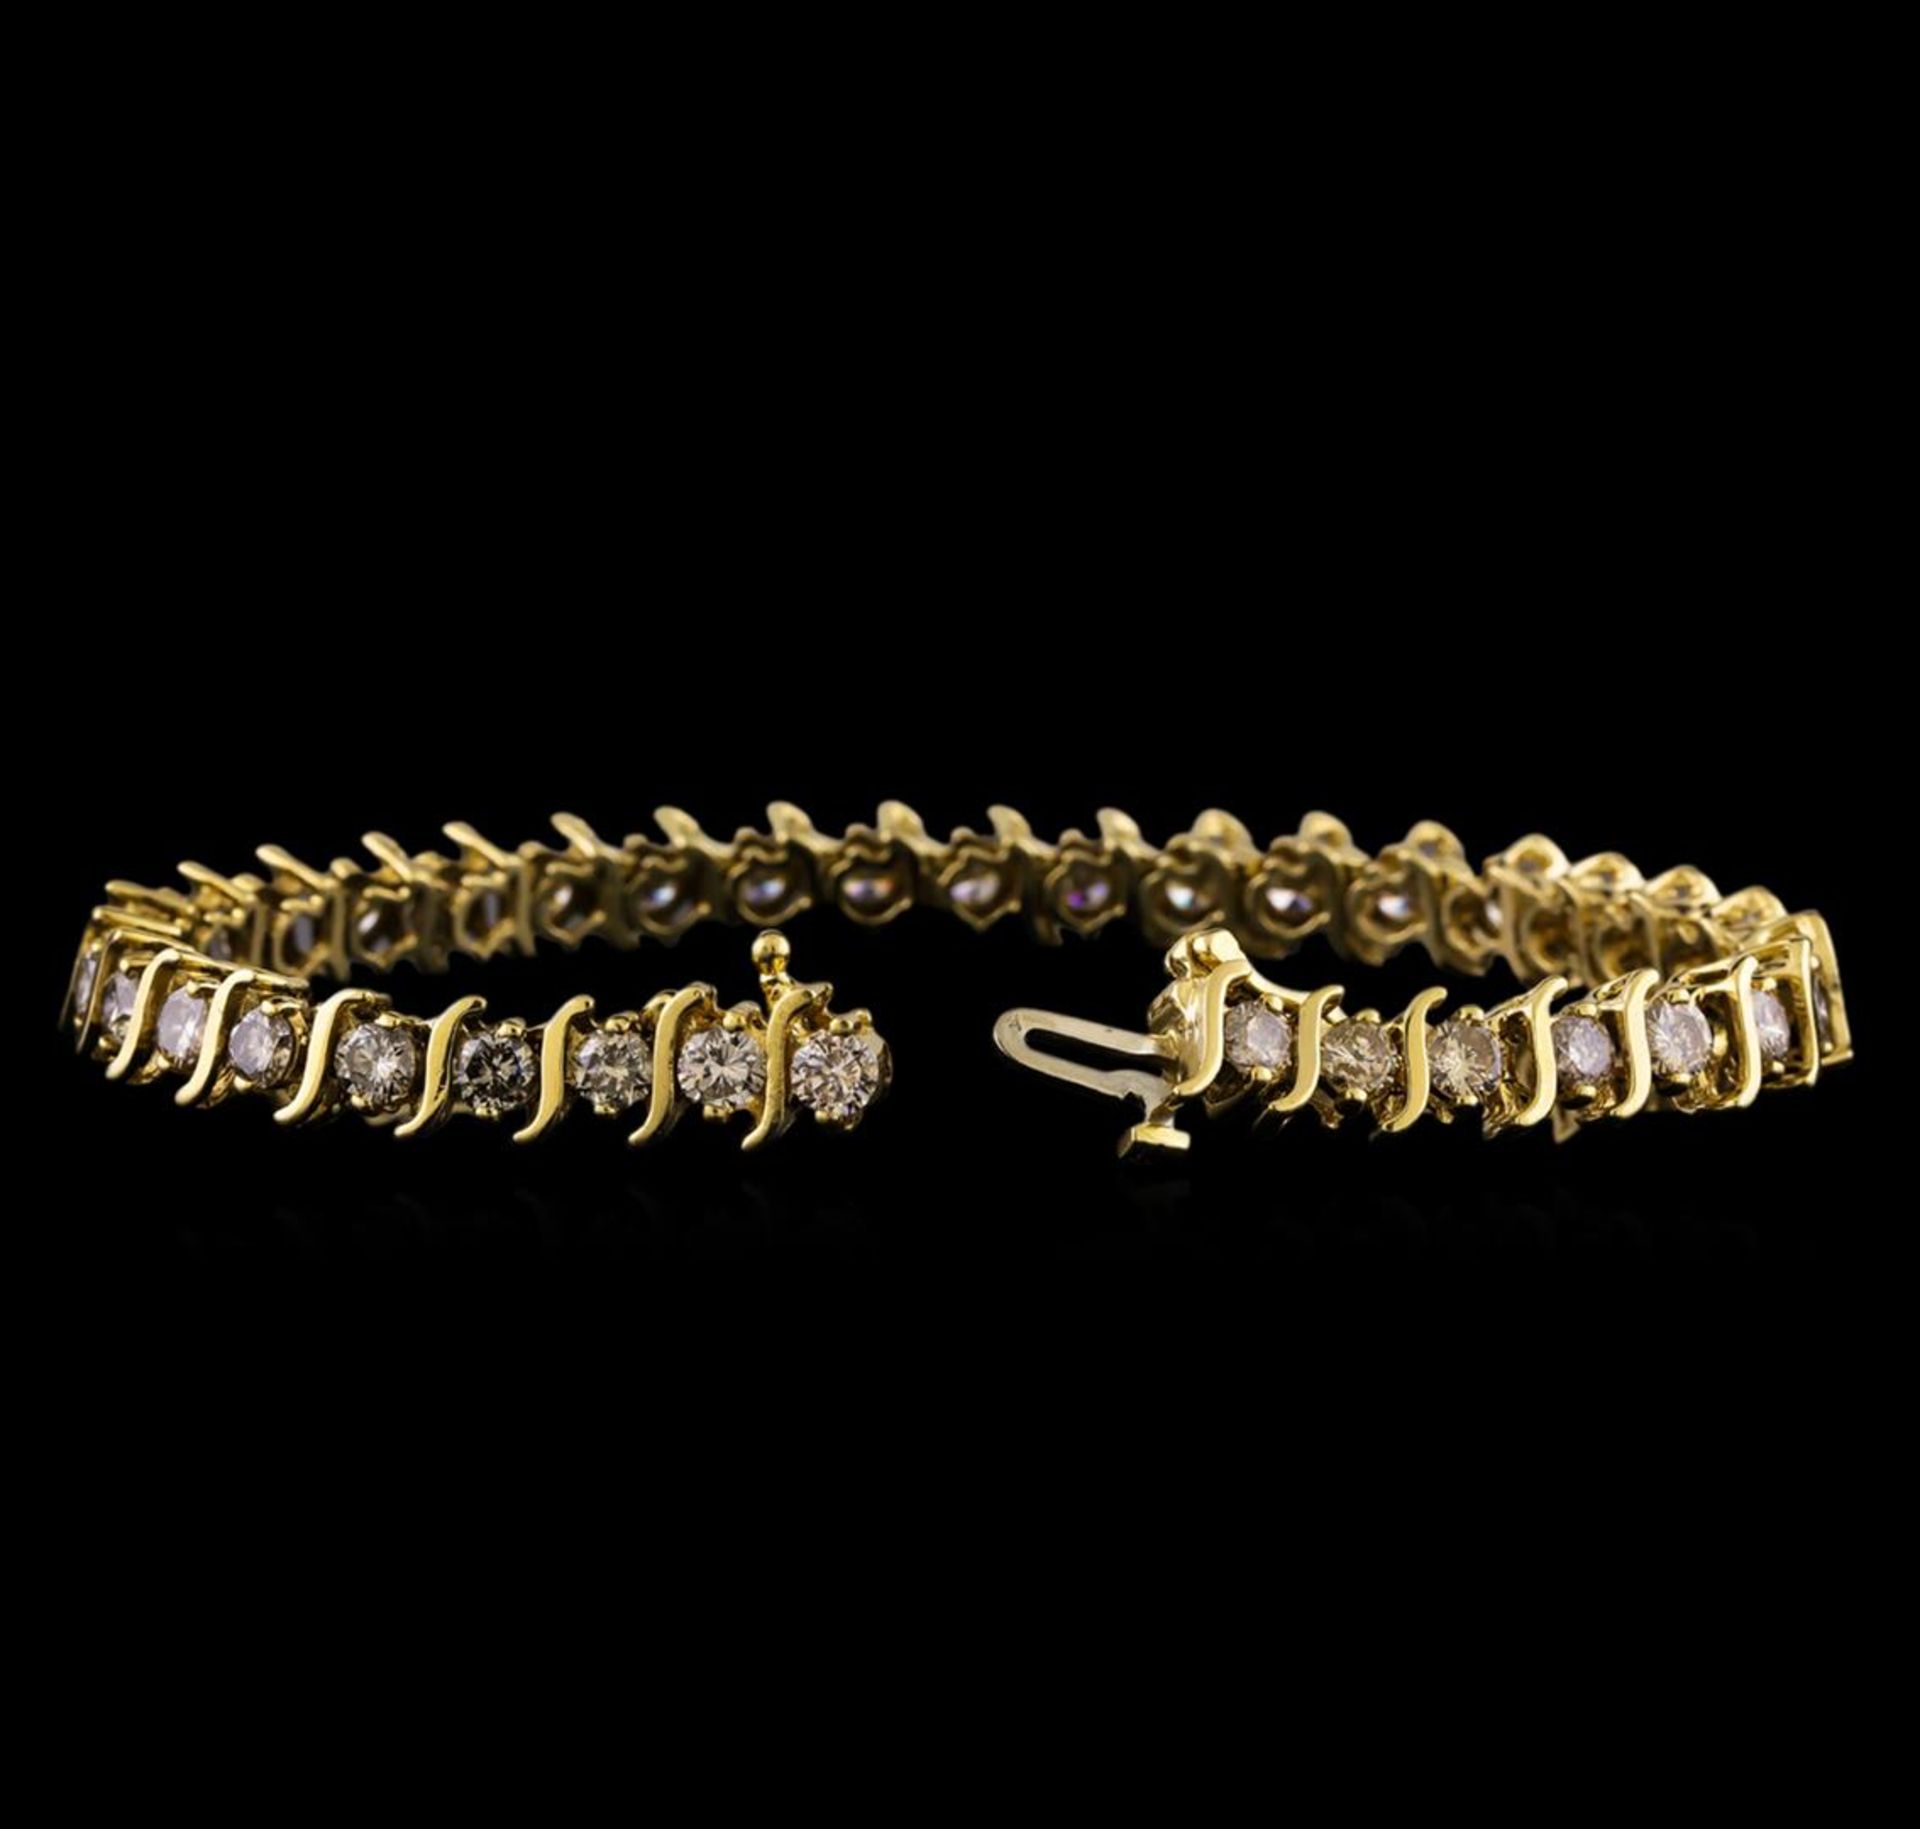 7.13 ctw Diamond Bracelet - 14KT Yellow Gold - Image 3 of 4